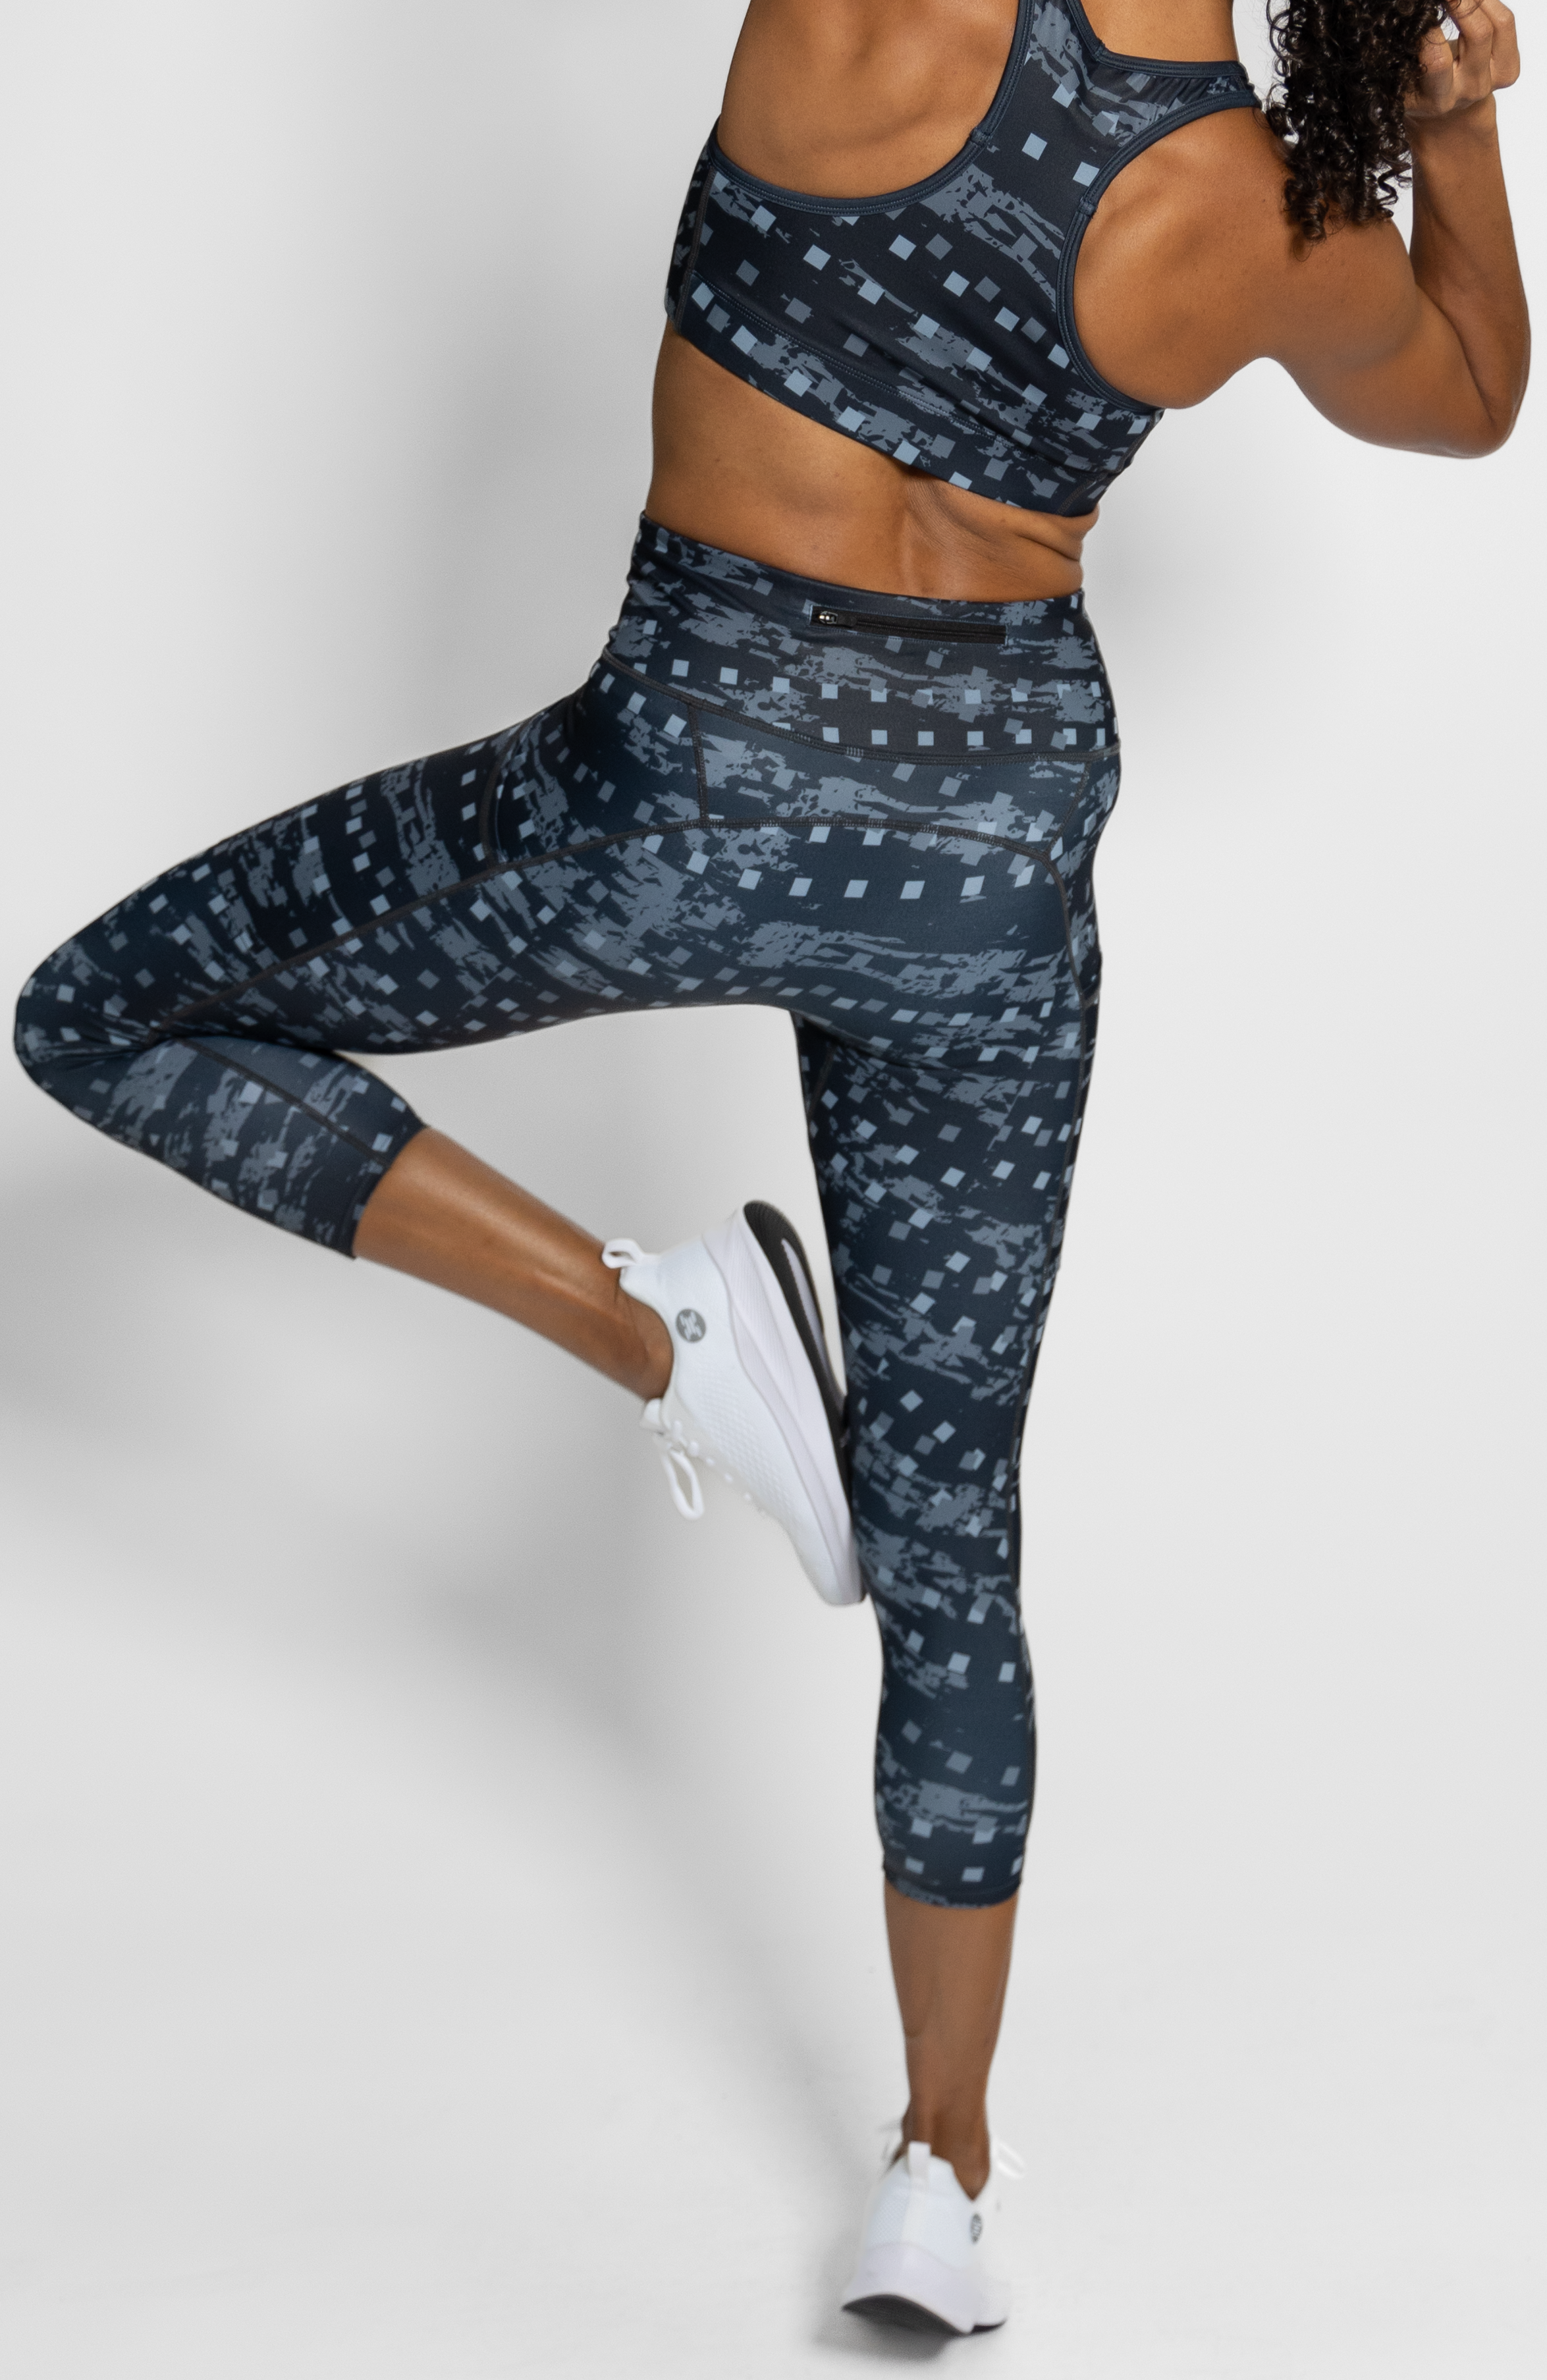 Onyx Women's Running Tights – Coeur Sports